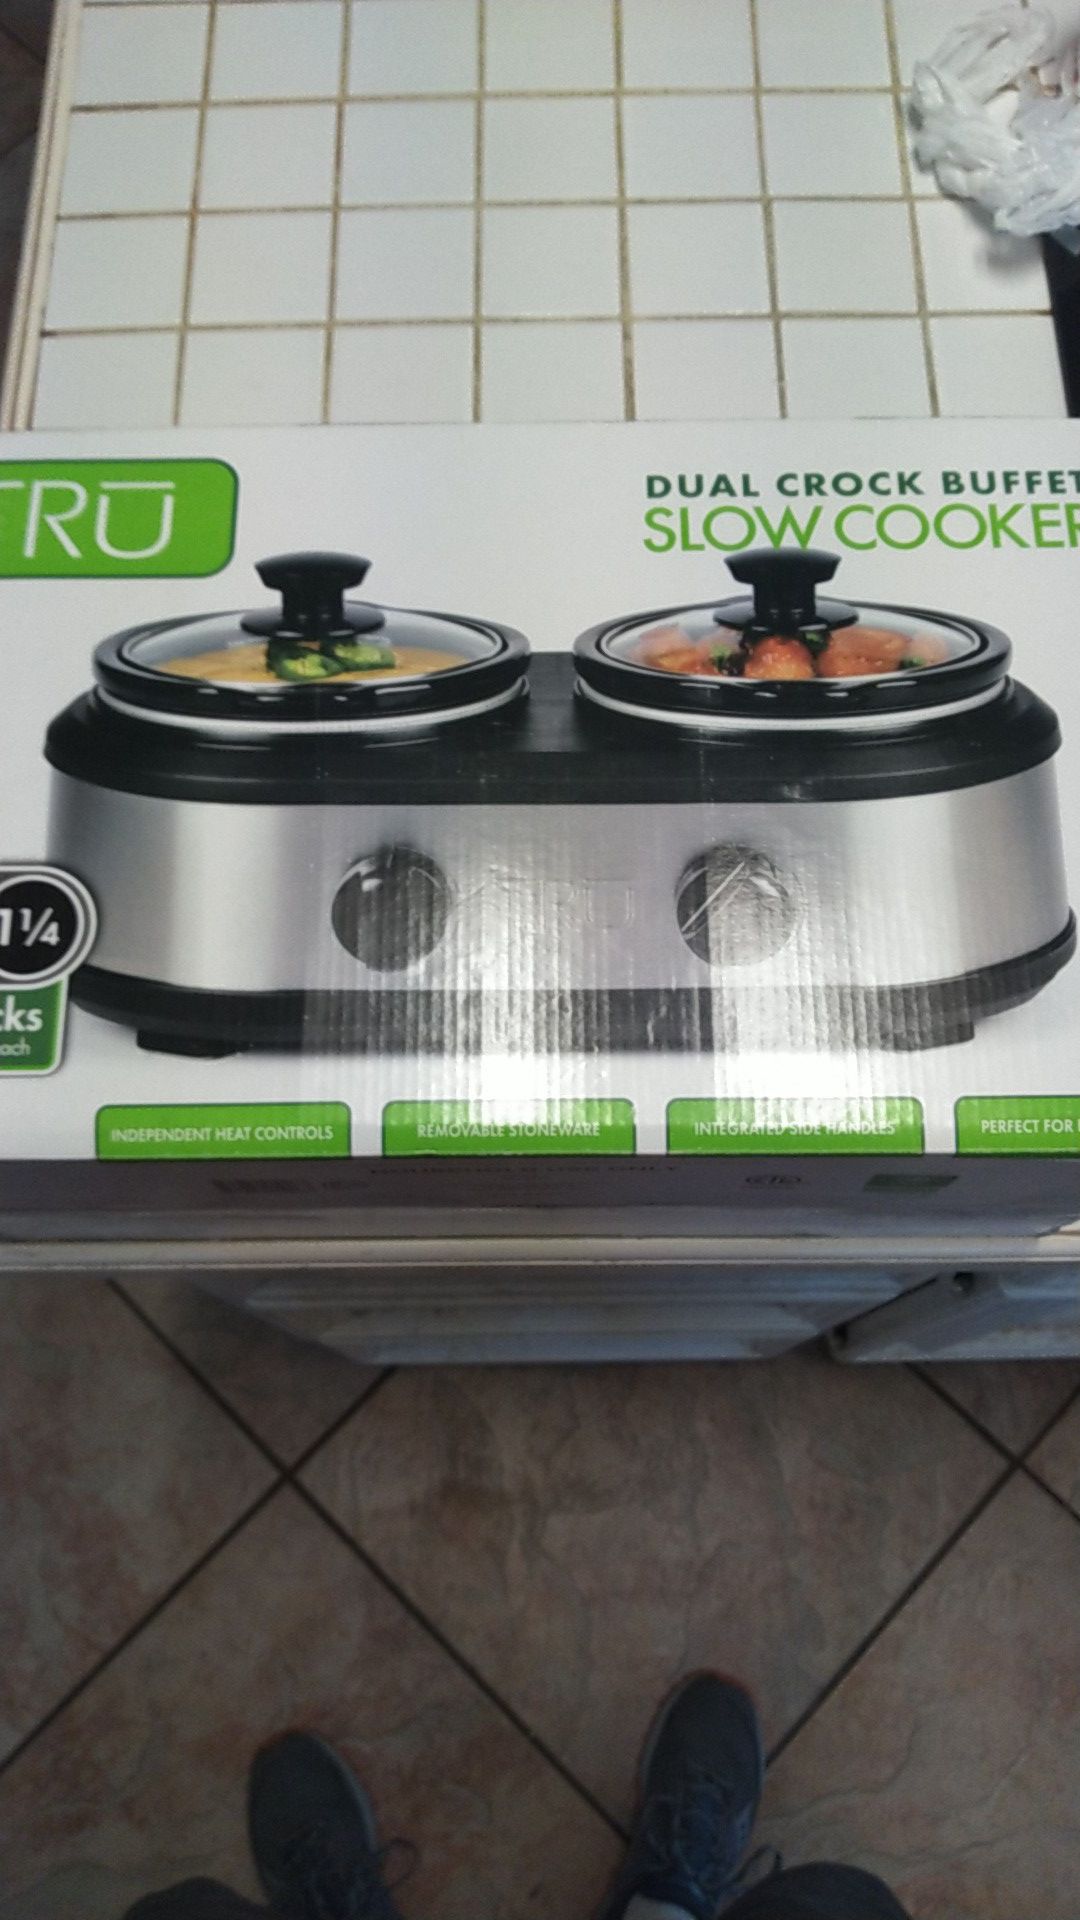 New dual crock pot slow cooker